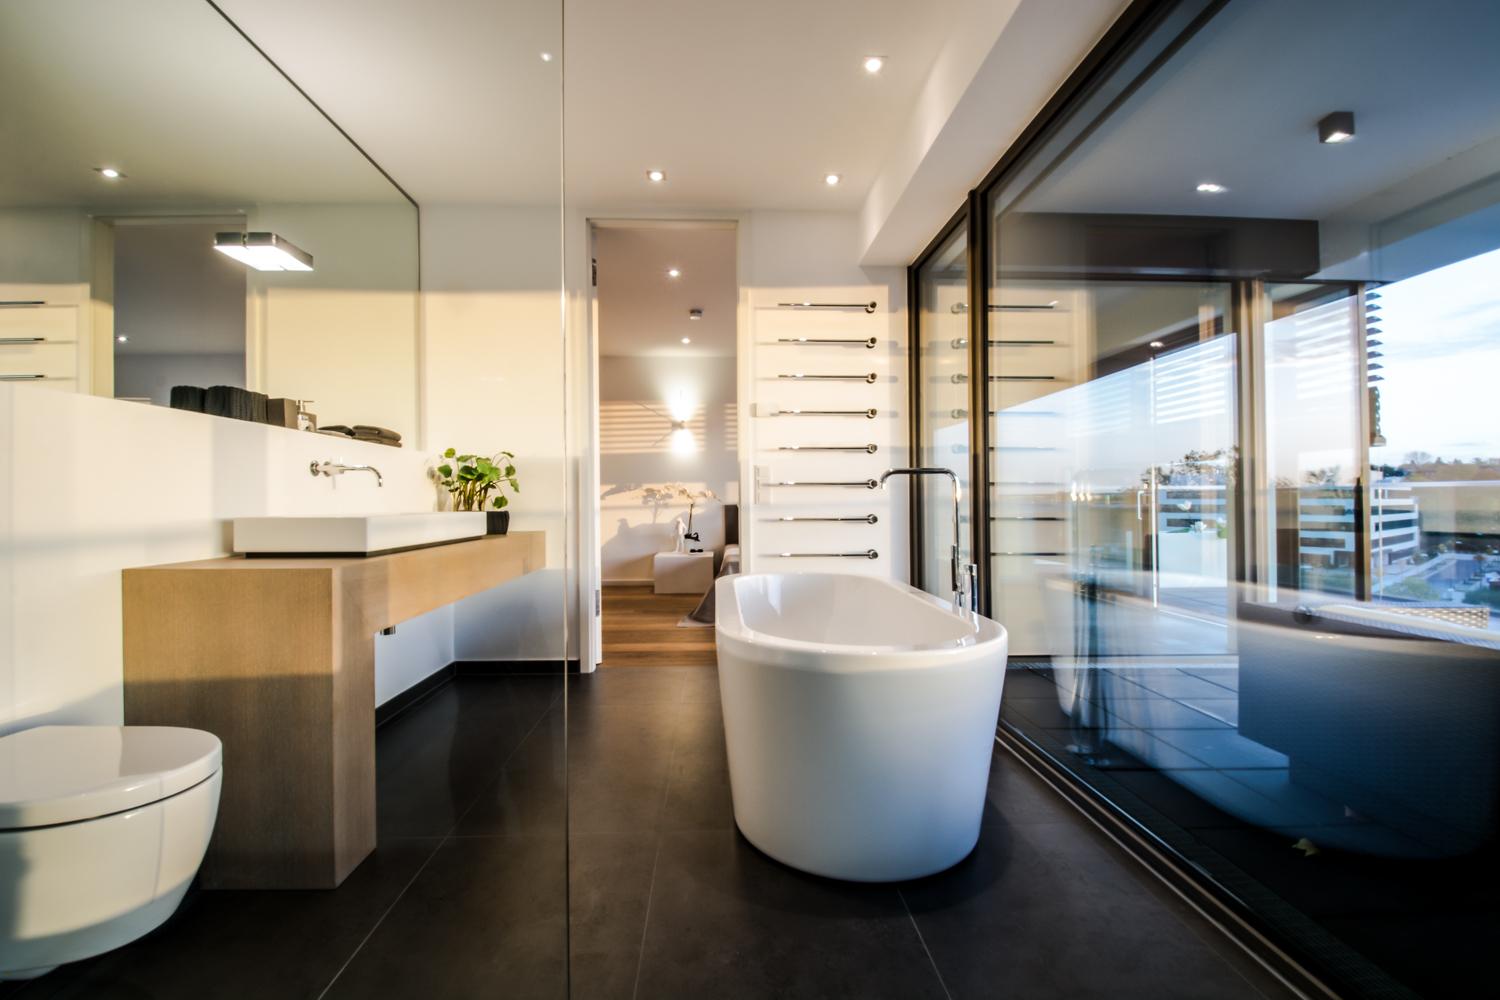 Badezimmer en suite #badewanne #badezimmer #smarthome #penthouse #holzwaschbecken #hohesfenster #badbeleuchtung ©www.Luna-homestaging.de